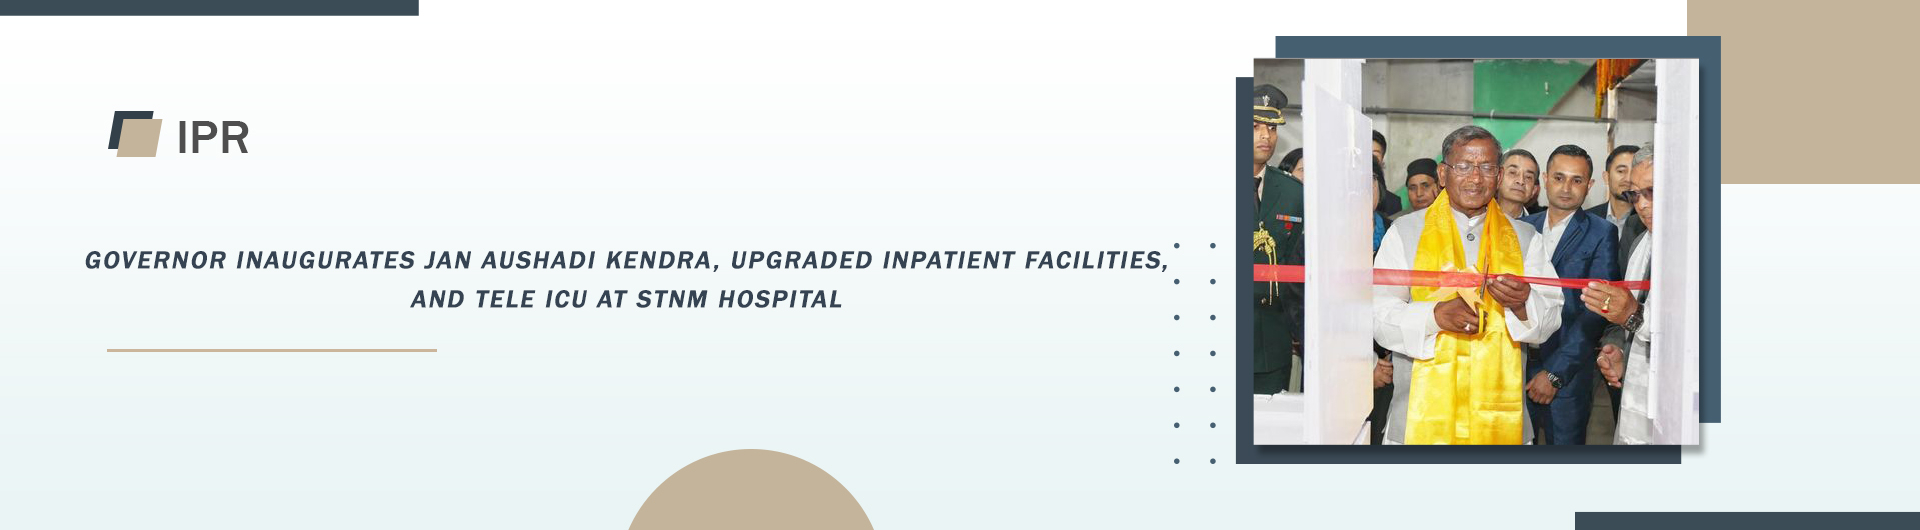 Governor Inaugurates Jan Aushadi Kendra, Upgraded Inpatient Facilities, and Tele ICU at STNM Hospital